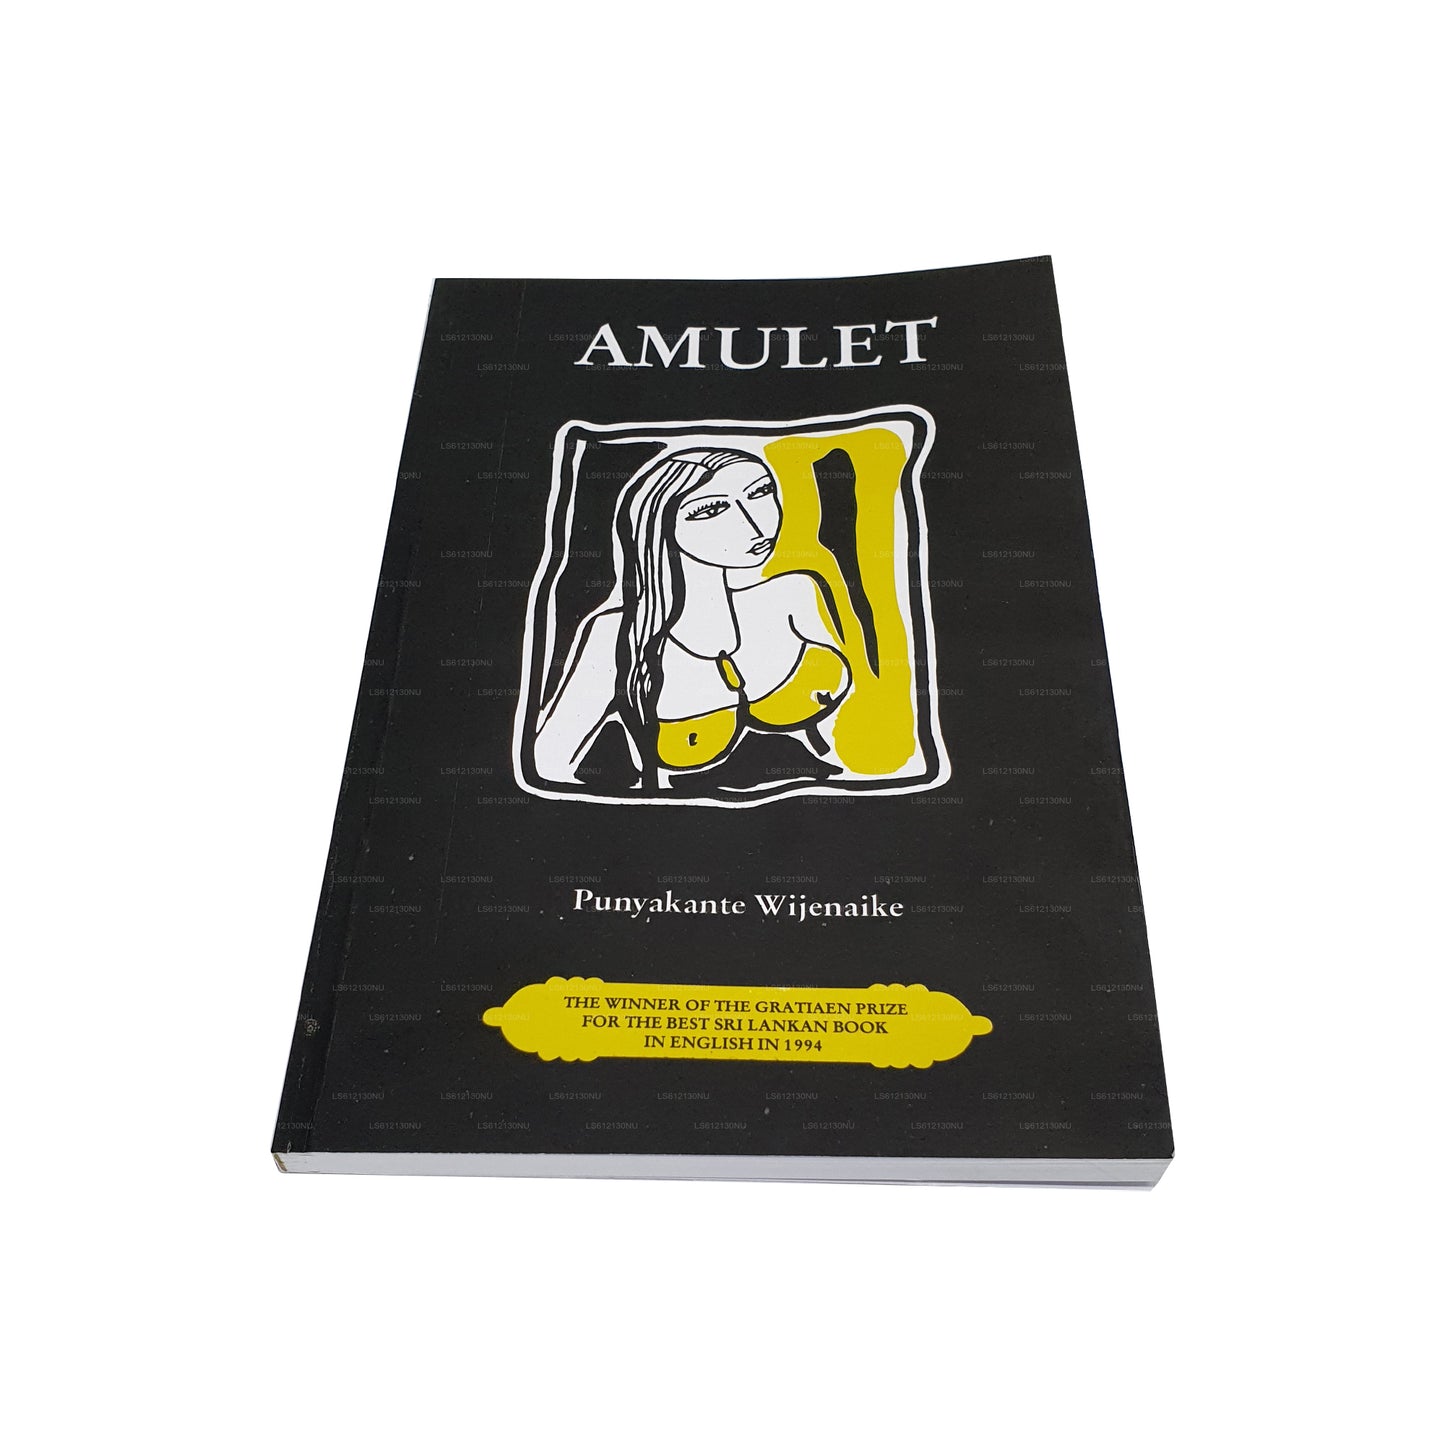 Amulett 